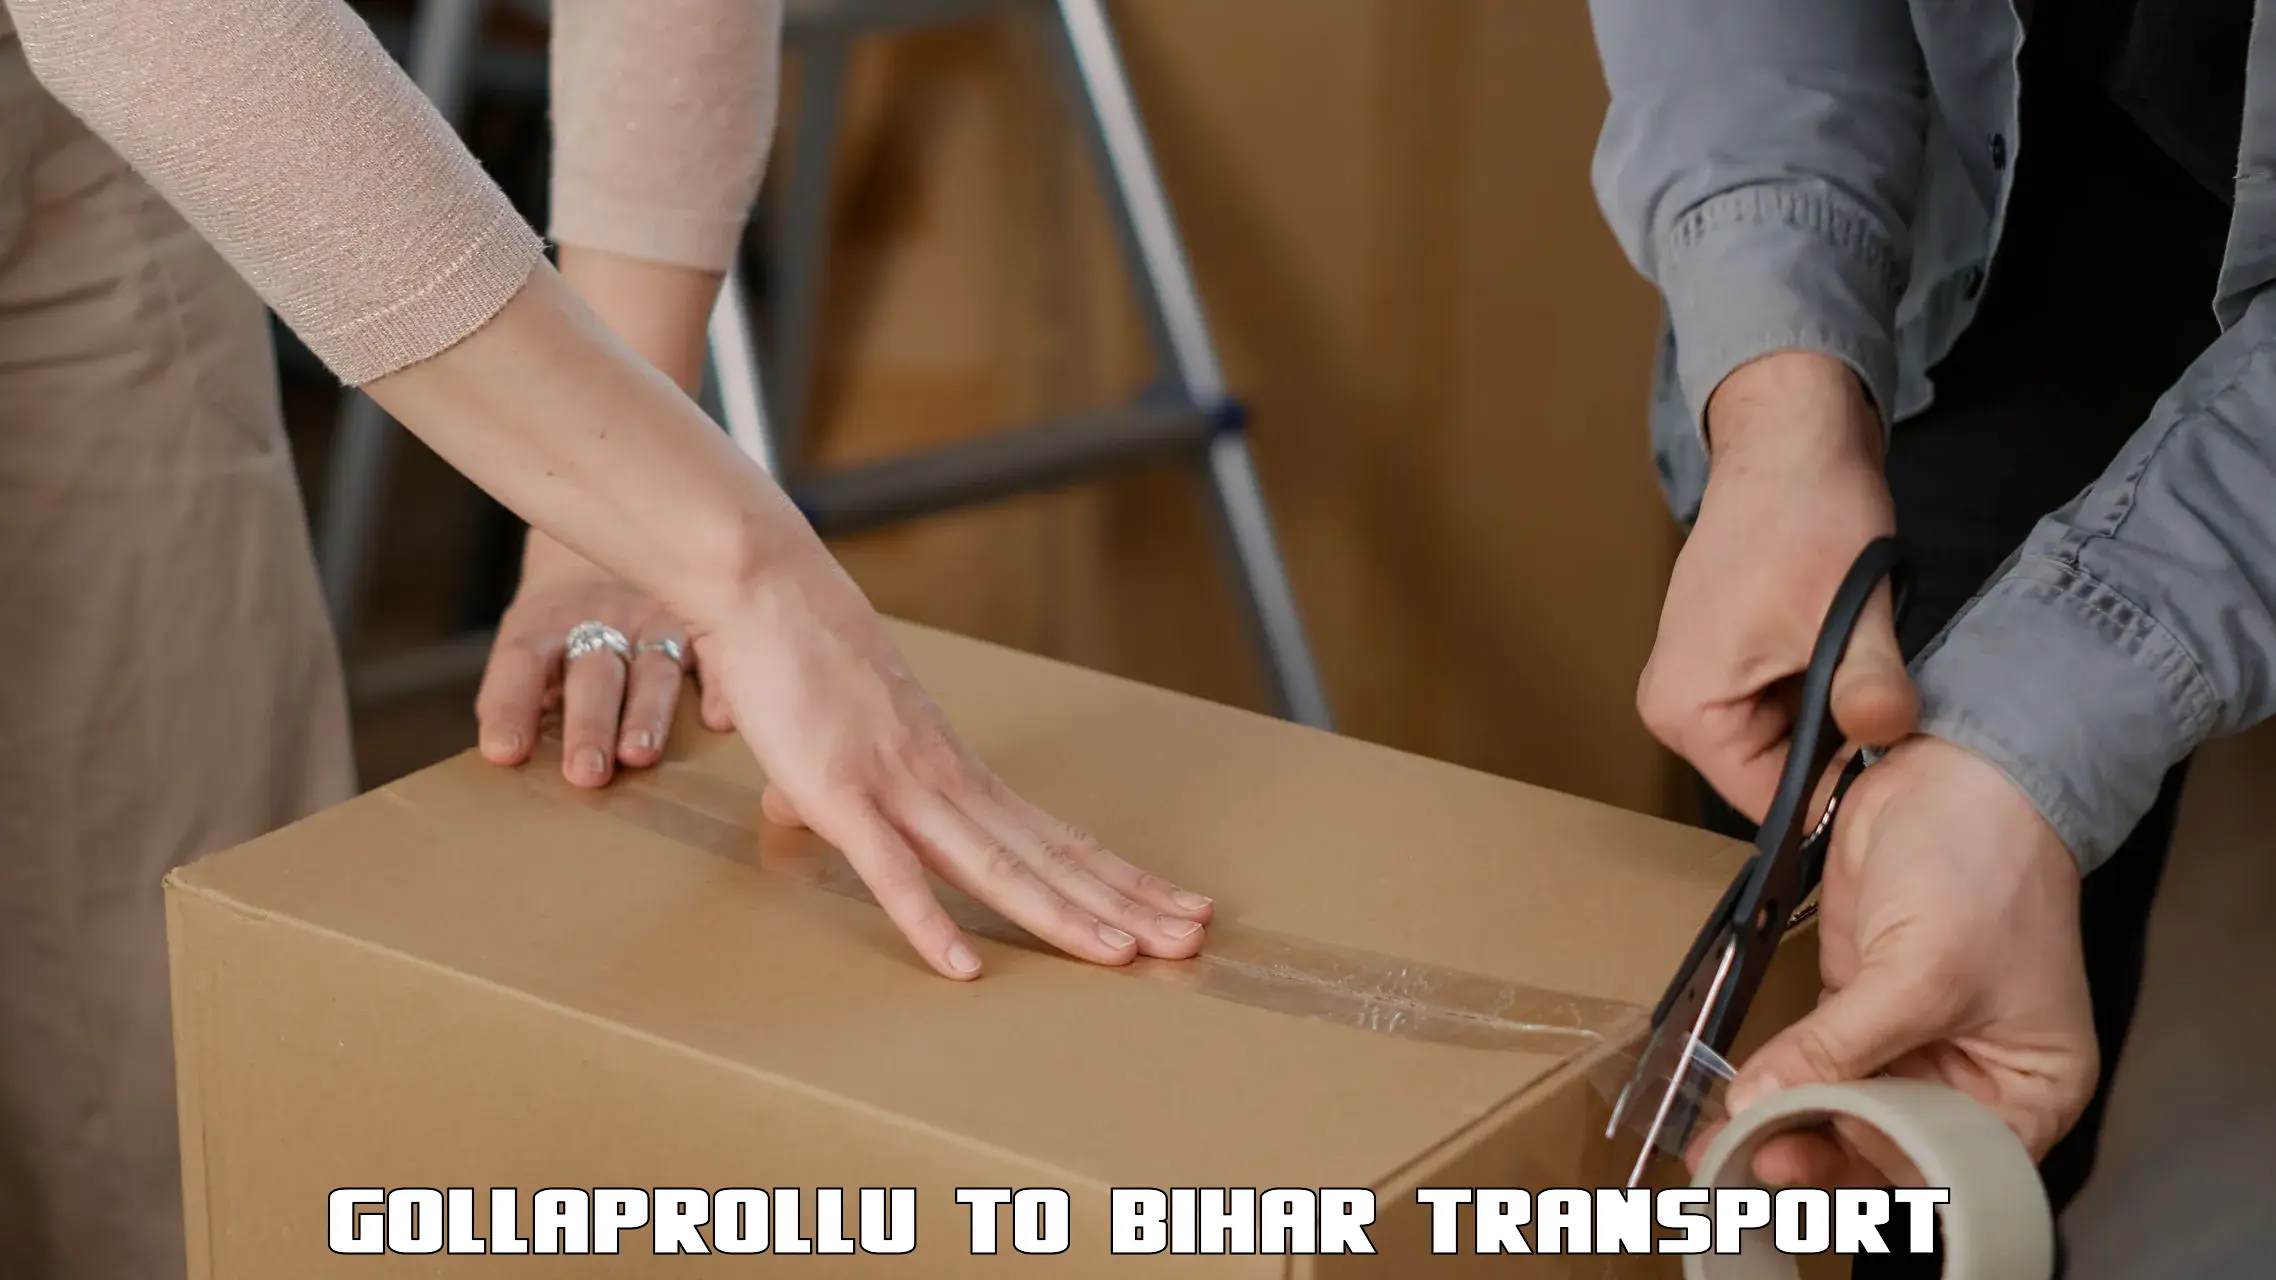 Pick up transport service Gollaprollu to Phulparas